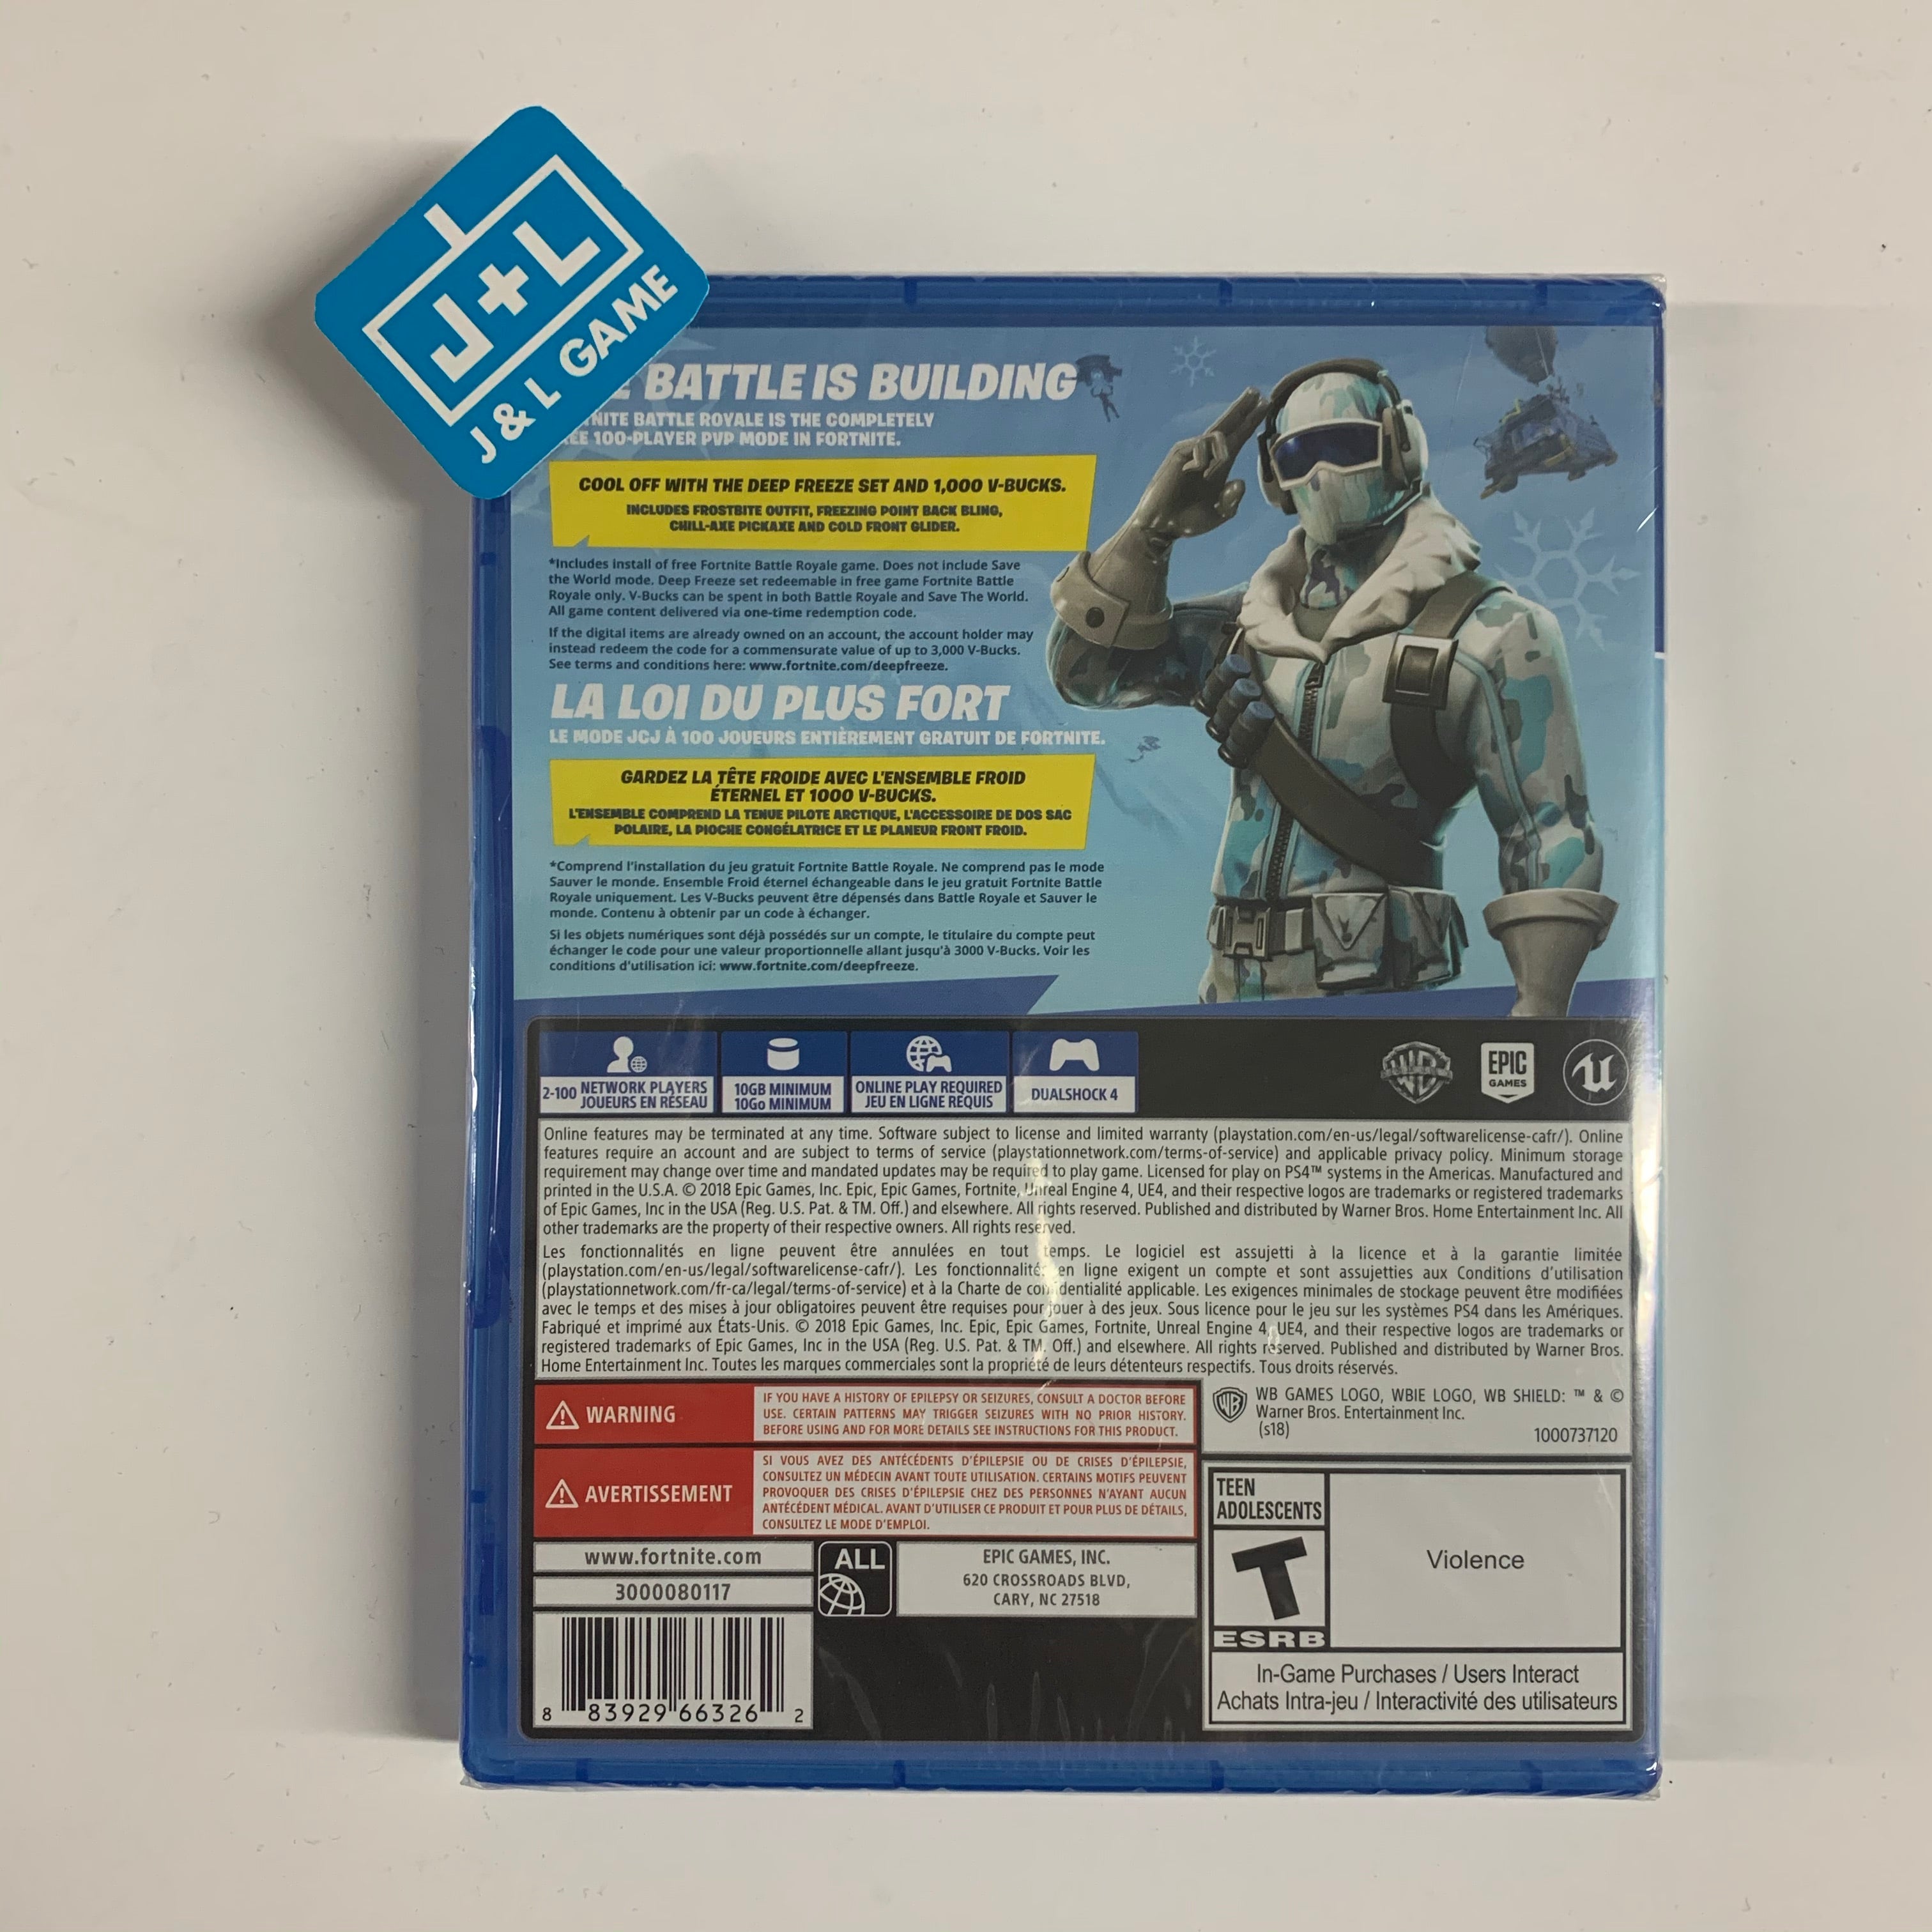 Warner Bros Fortnite: Deep Freeze Bundle - PlayStation 4 Video Games WB Games   